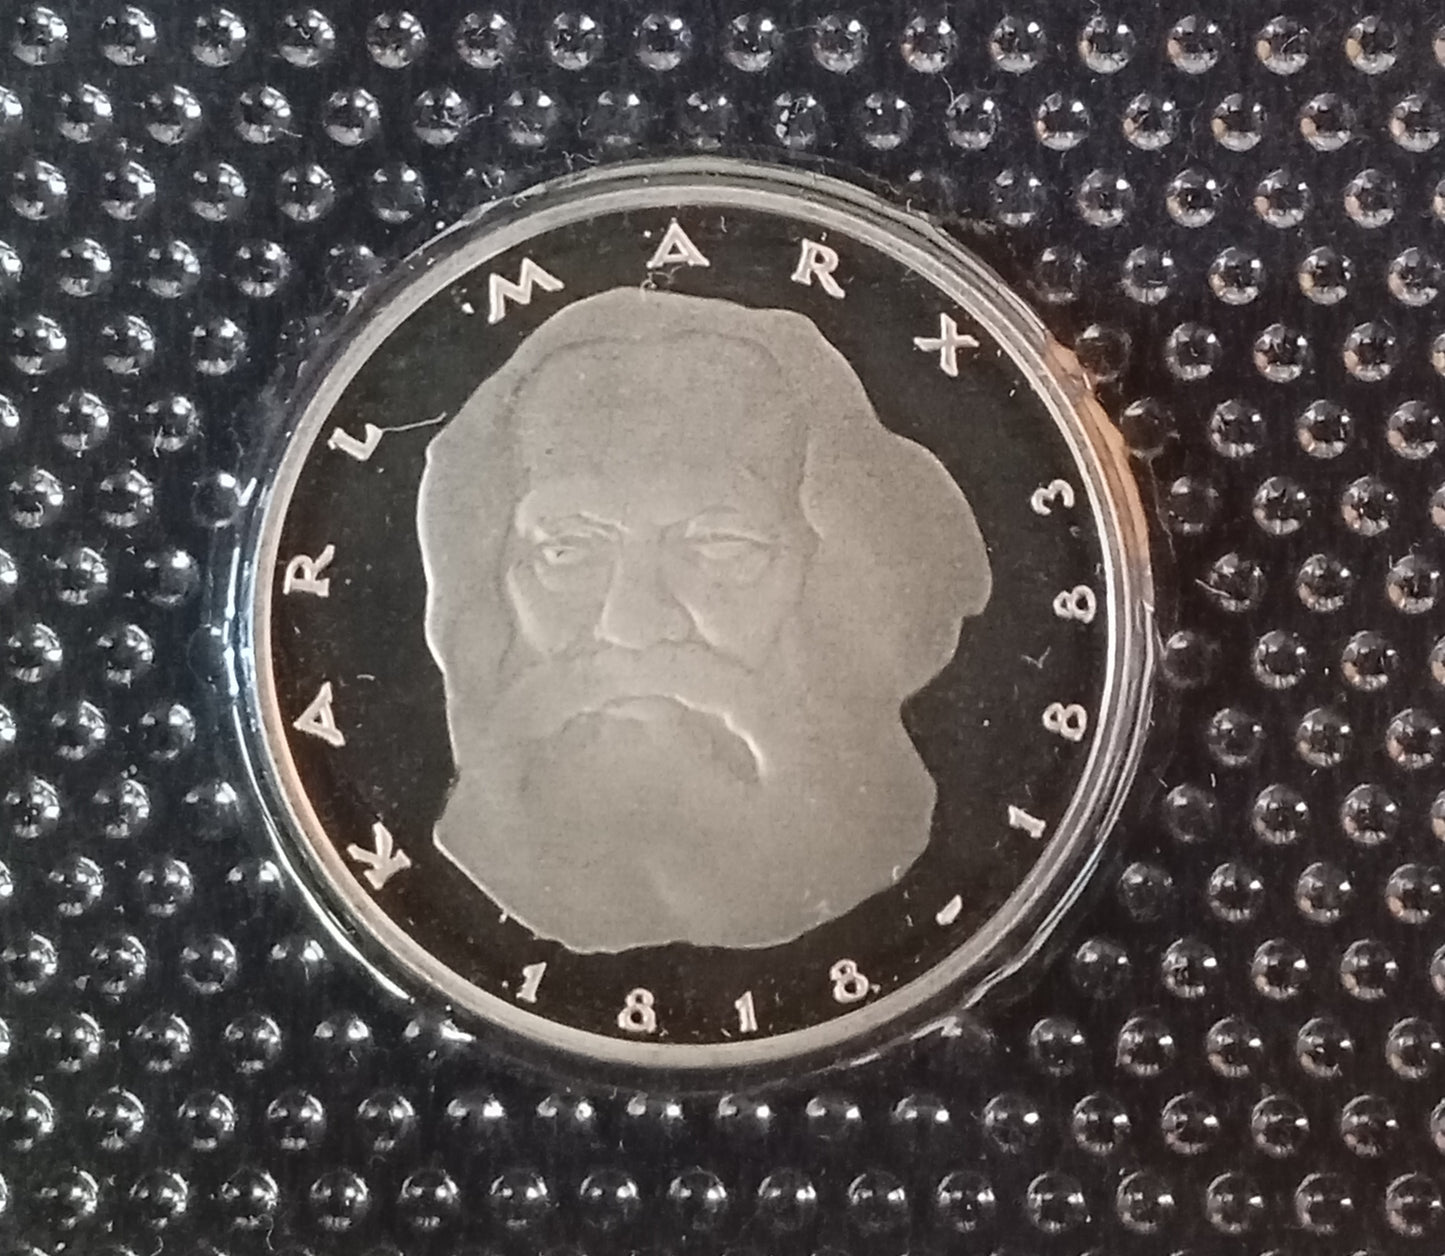 500TH BIRTHDAY OF ALBRECHT DÜRER, series 5 DM silver coin, 1972